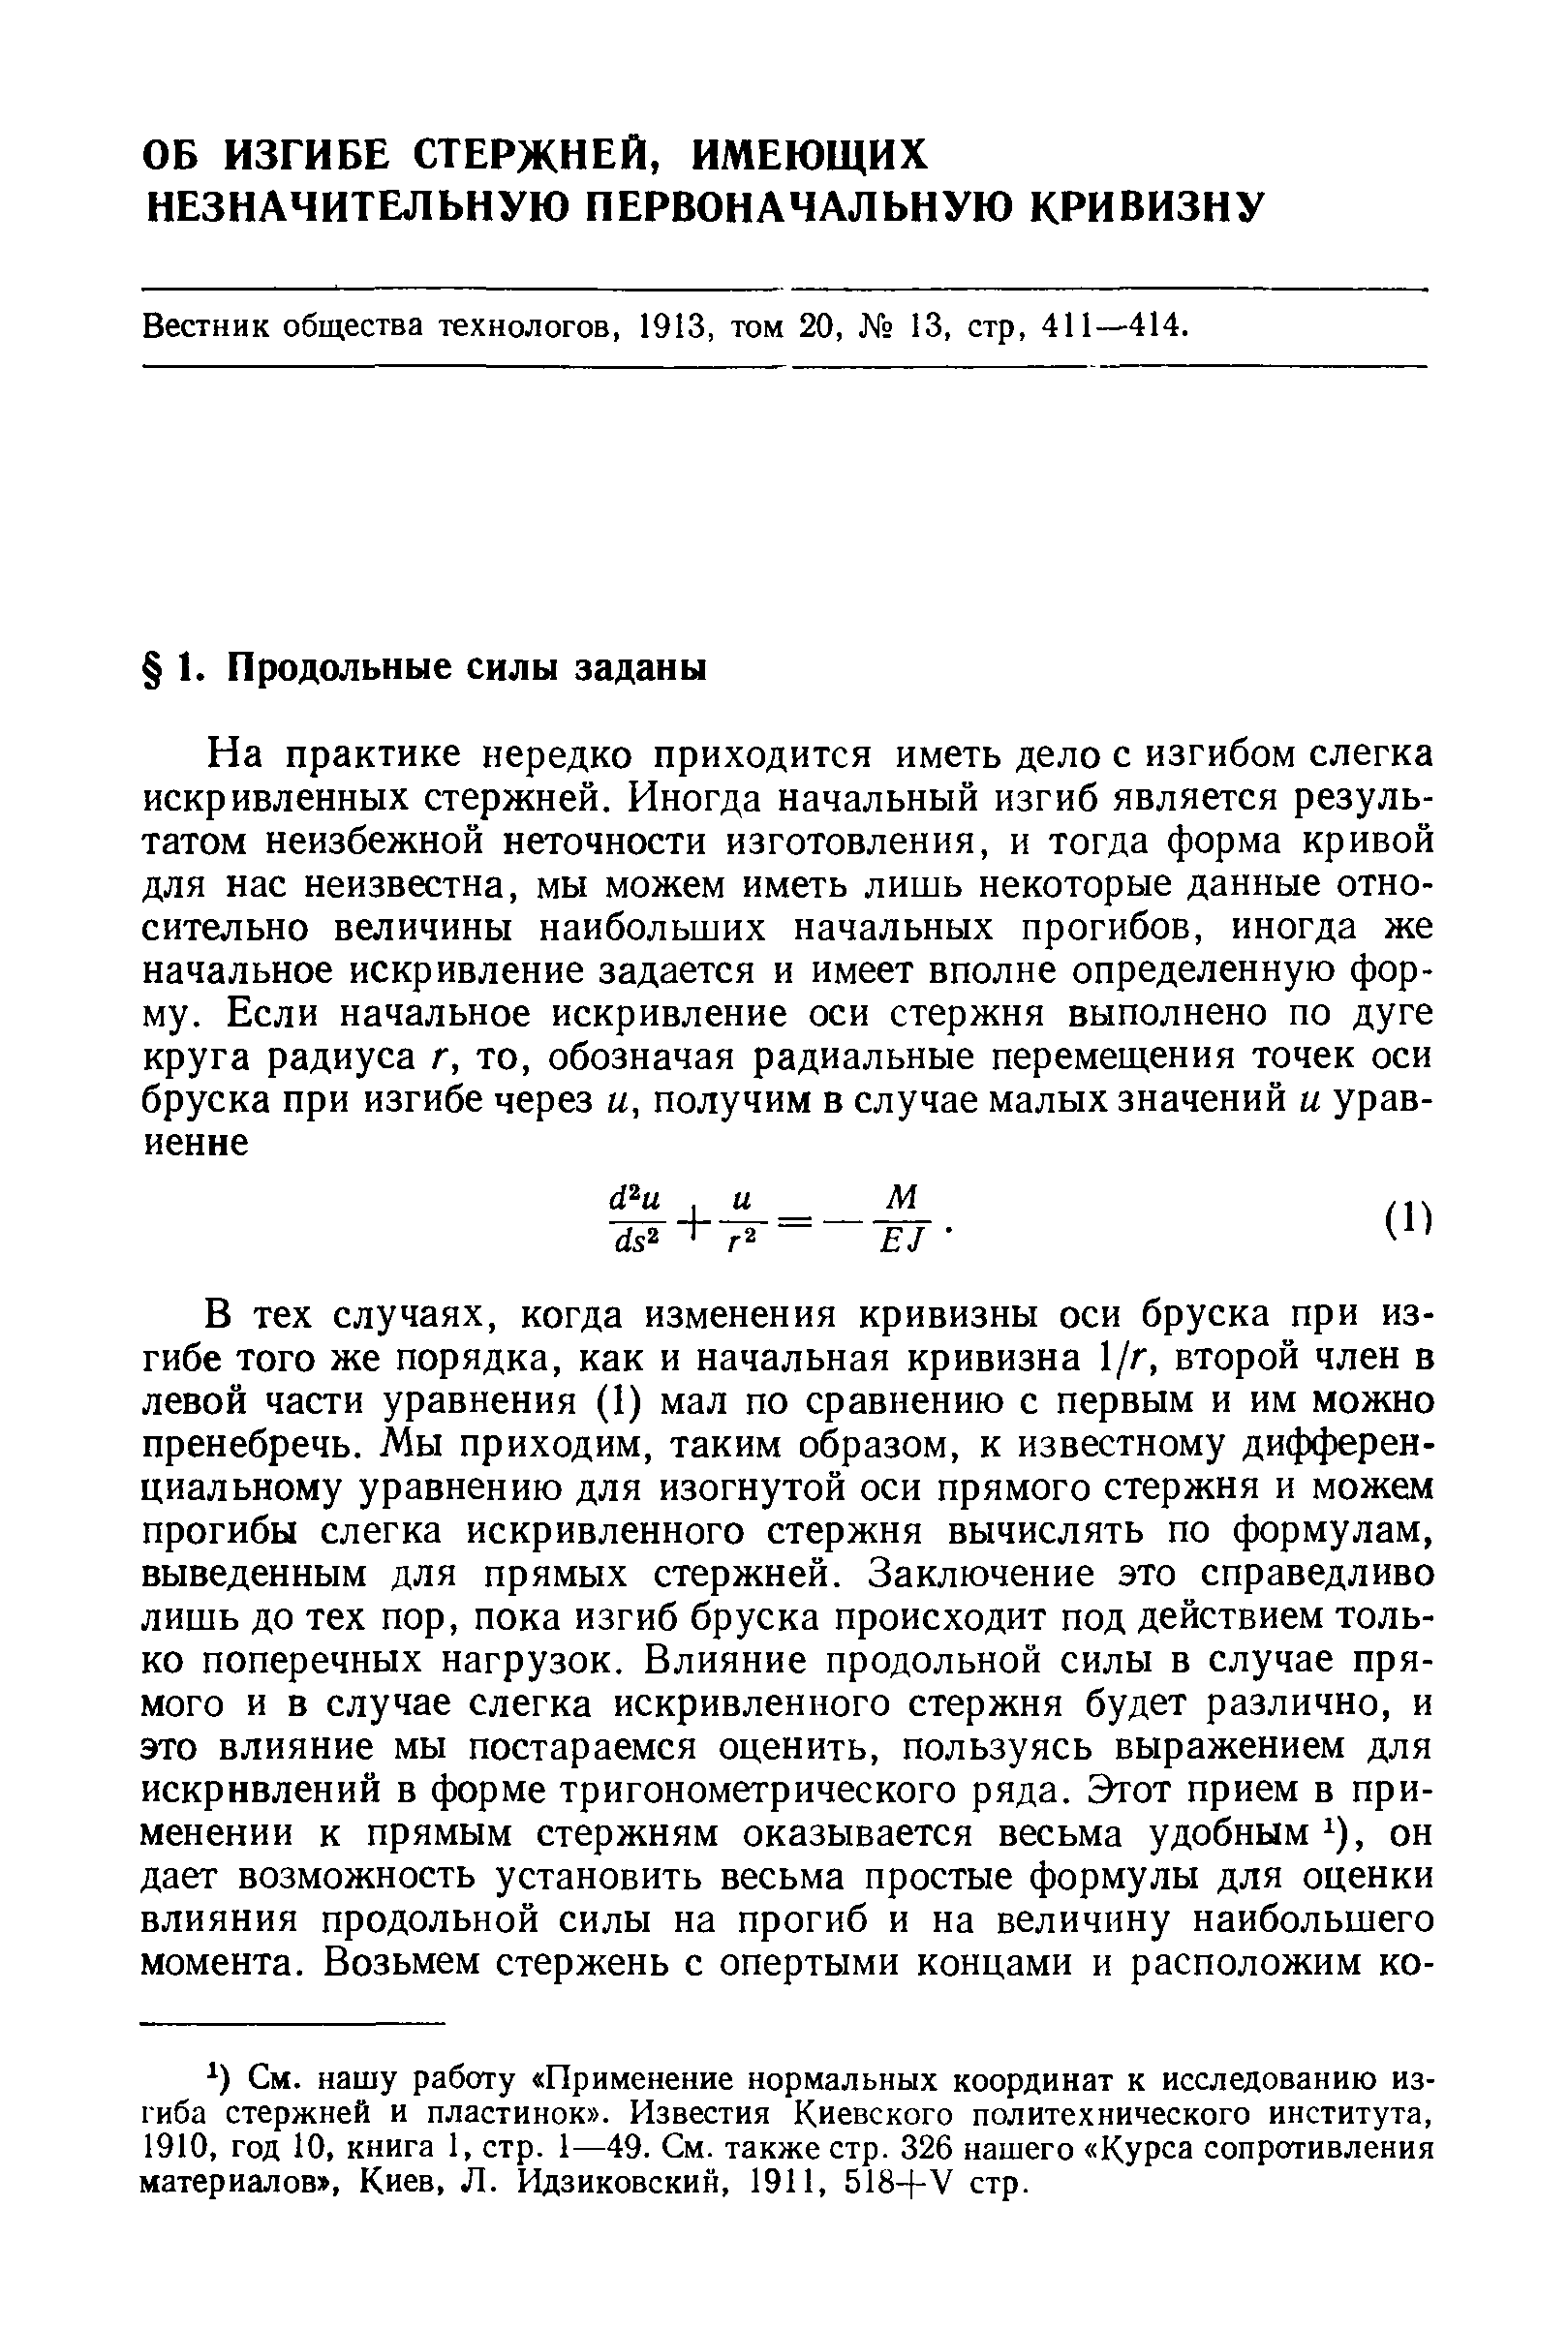 Вестник общества технологов, 1913, том 20, 13, стр, 411—414.
